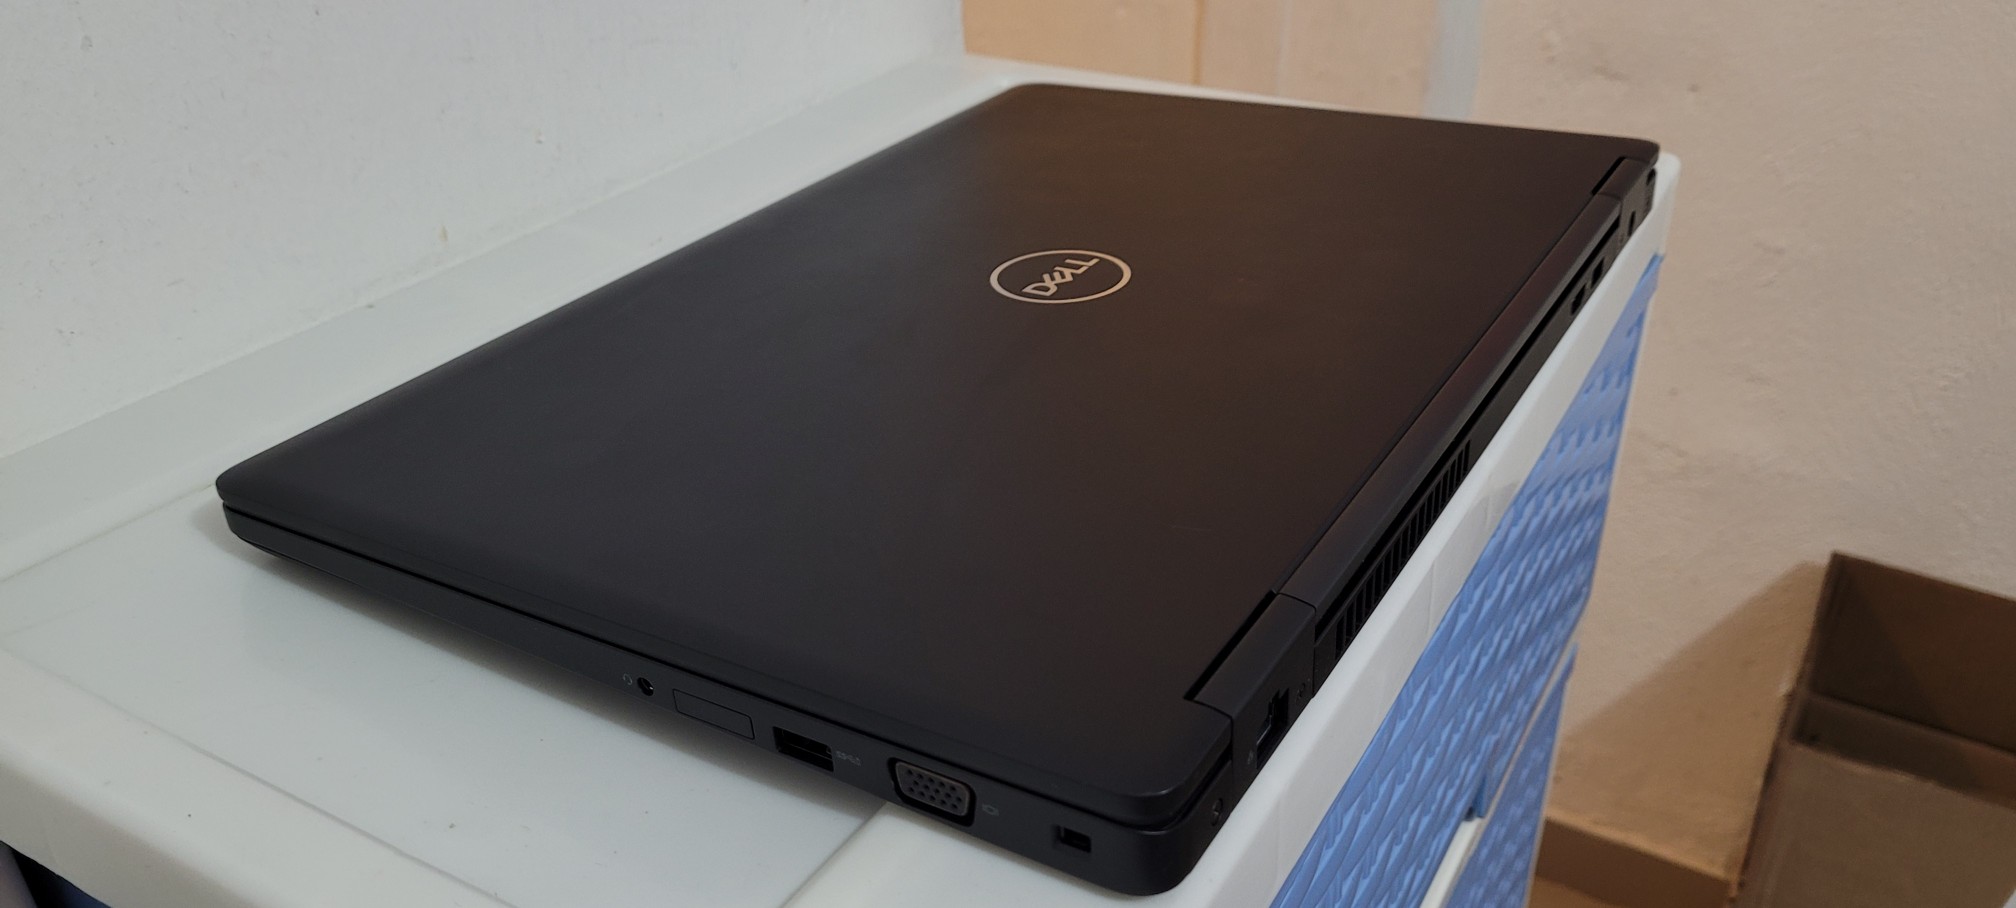 computadoras y laptops - Dell Slim 14 Pulg Core i7 6ta Gen Ram 8gb ddr4 Disco 256gb SSD Solido 2